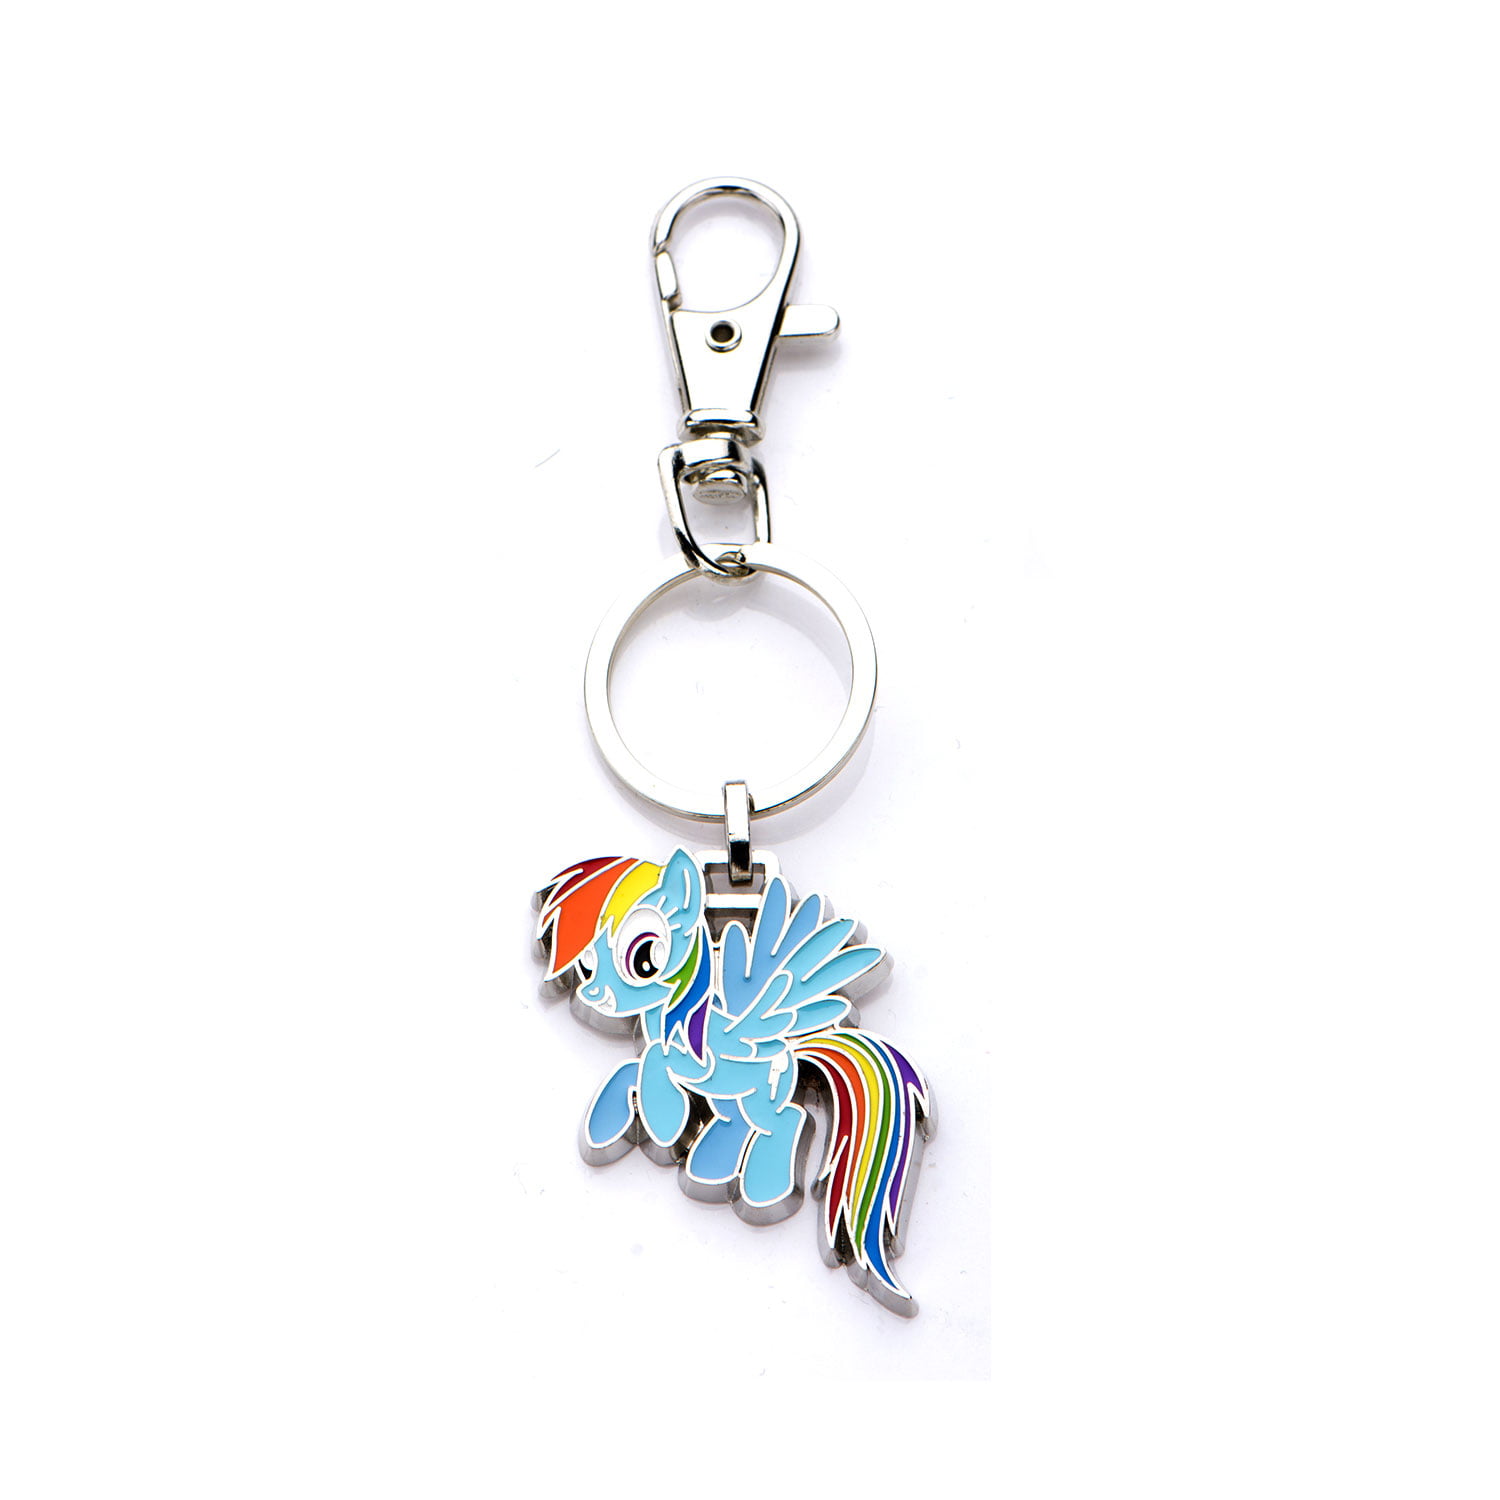 My Little Pony ‘Rainbow Dash’ Pvc Key Ring 